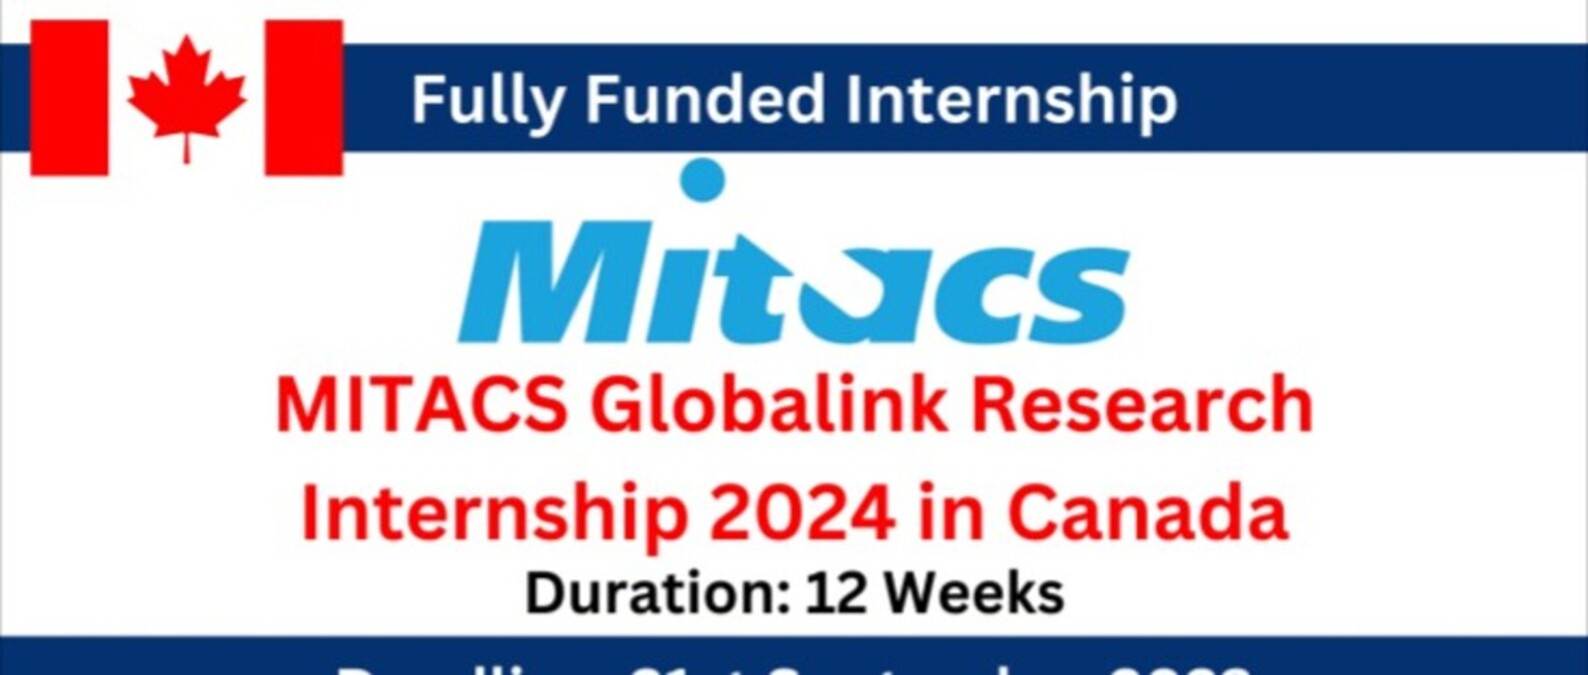 Mitacs Globalink Research Internship to Canada 2023/2023